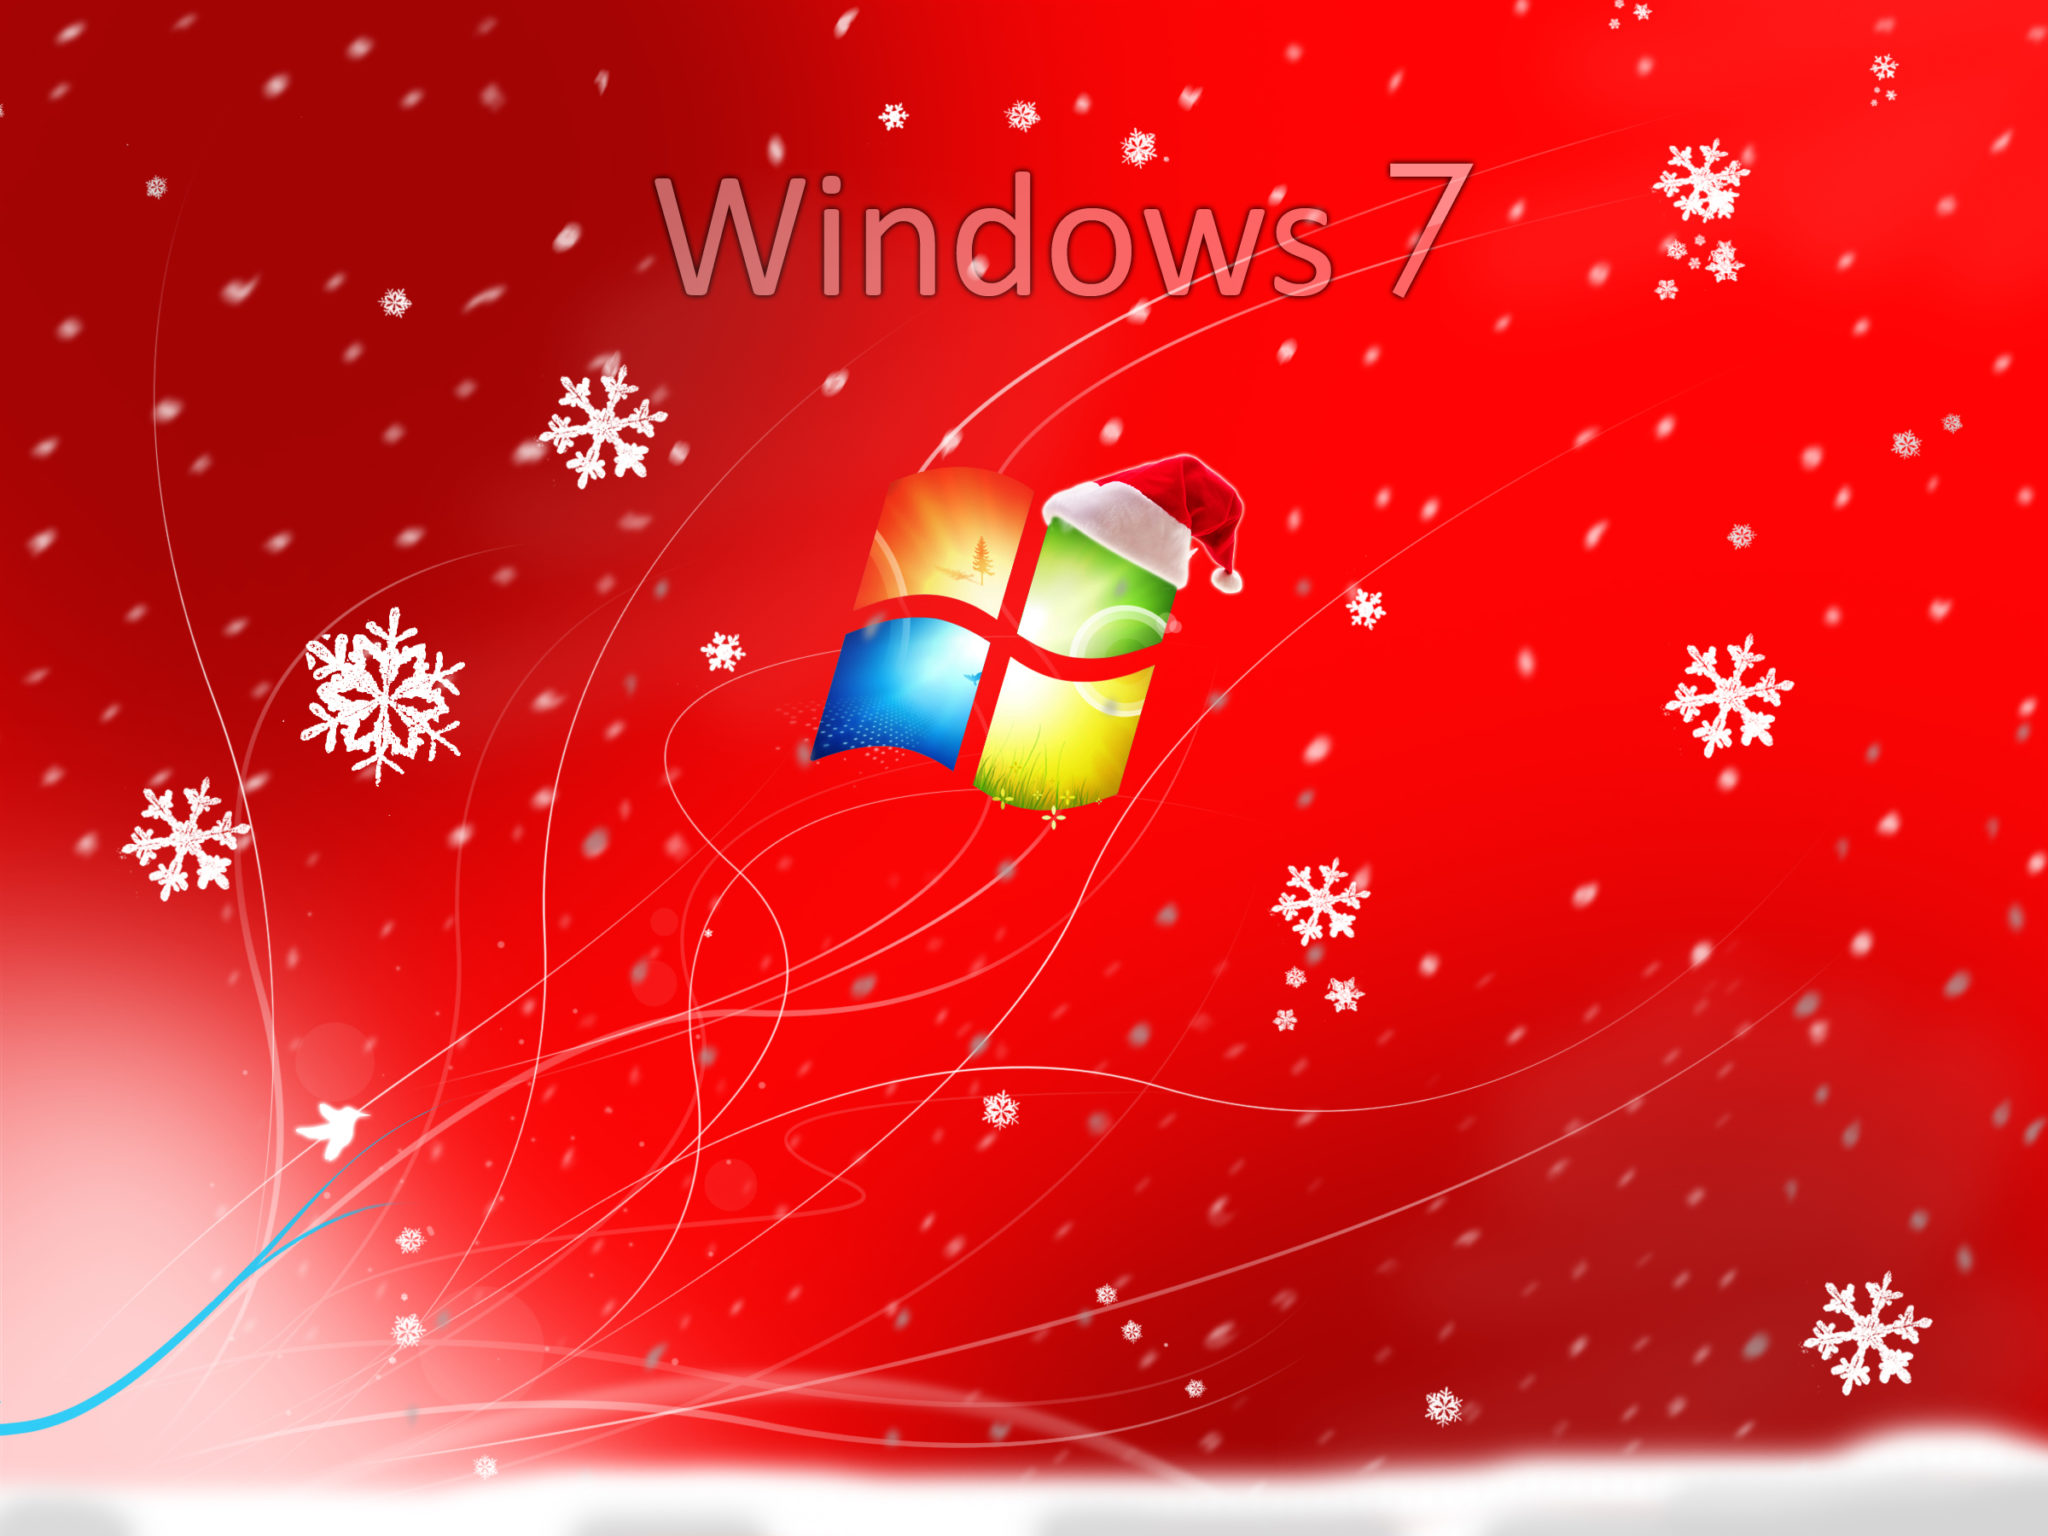 Windows_7_xMas_Wallpaper_v_1_by_atti12